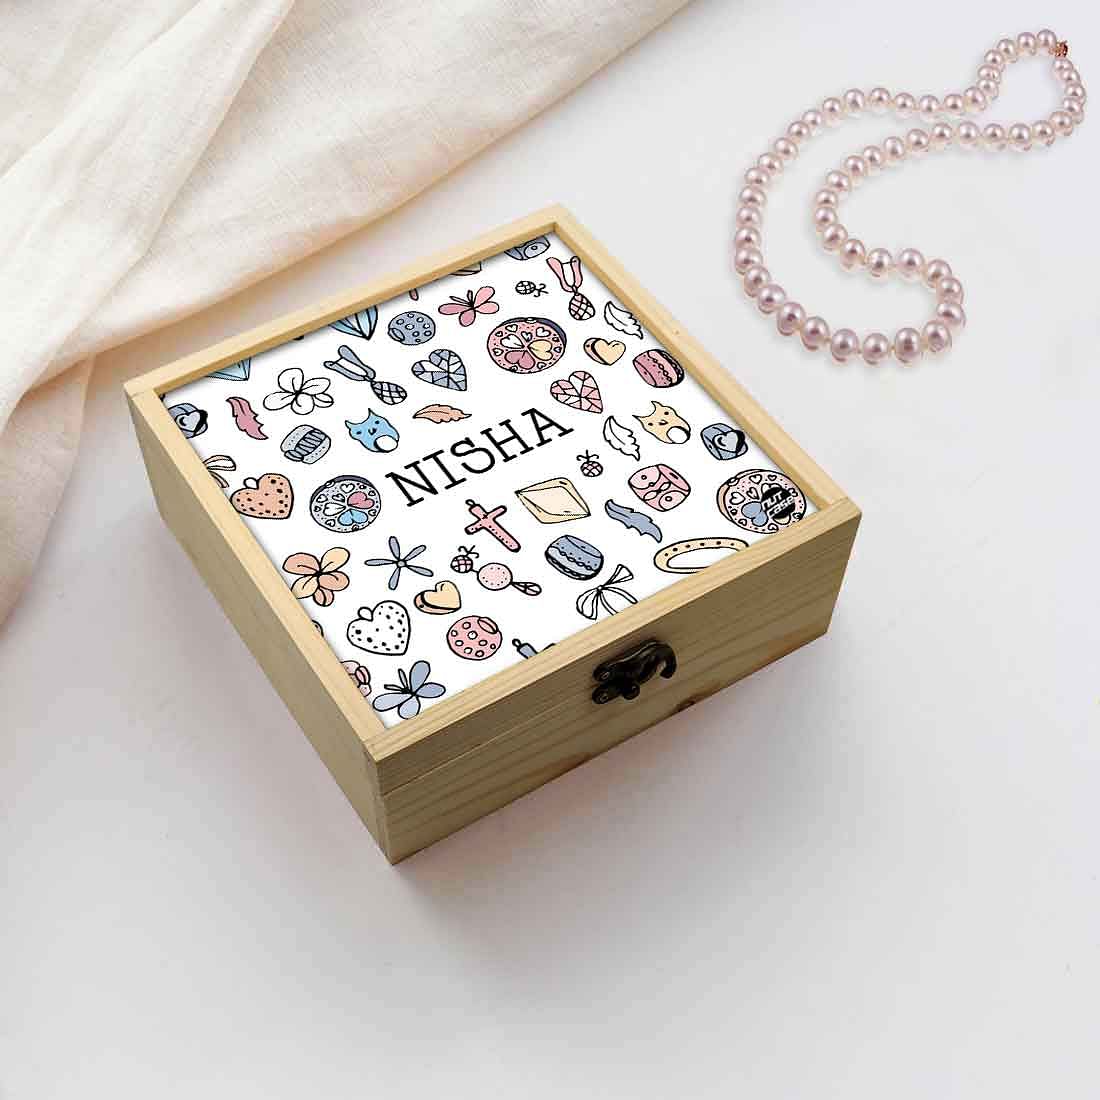 Personalized Jewellery Box Organizer -  Hairband Design Nutcase